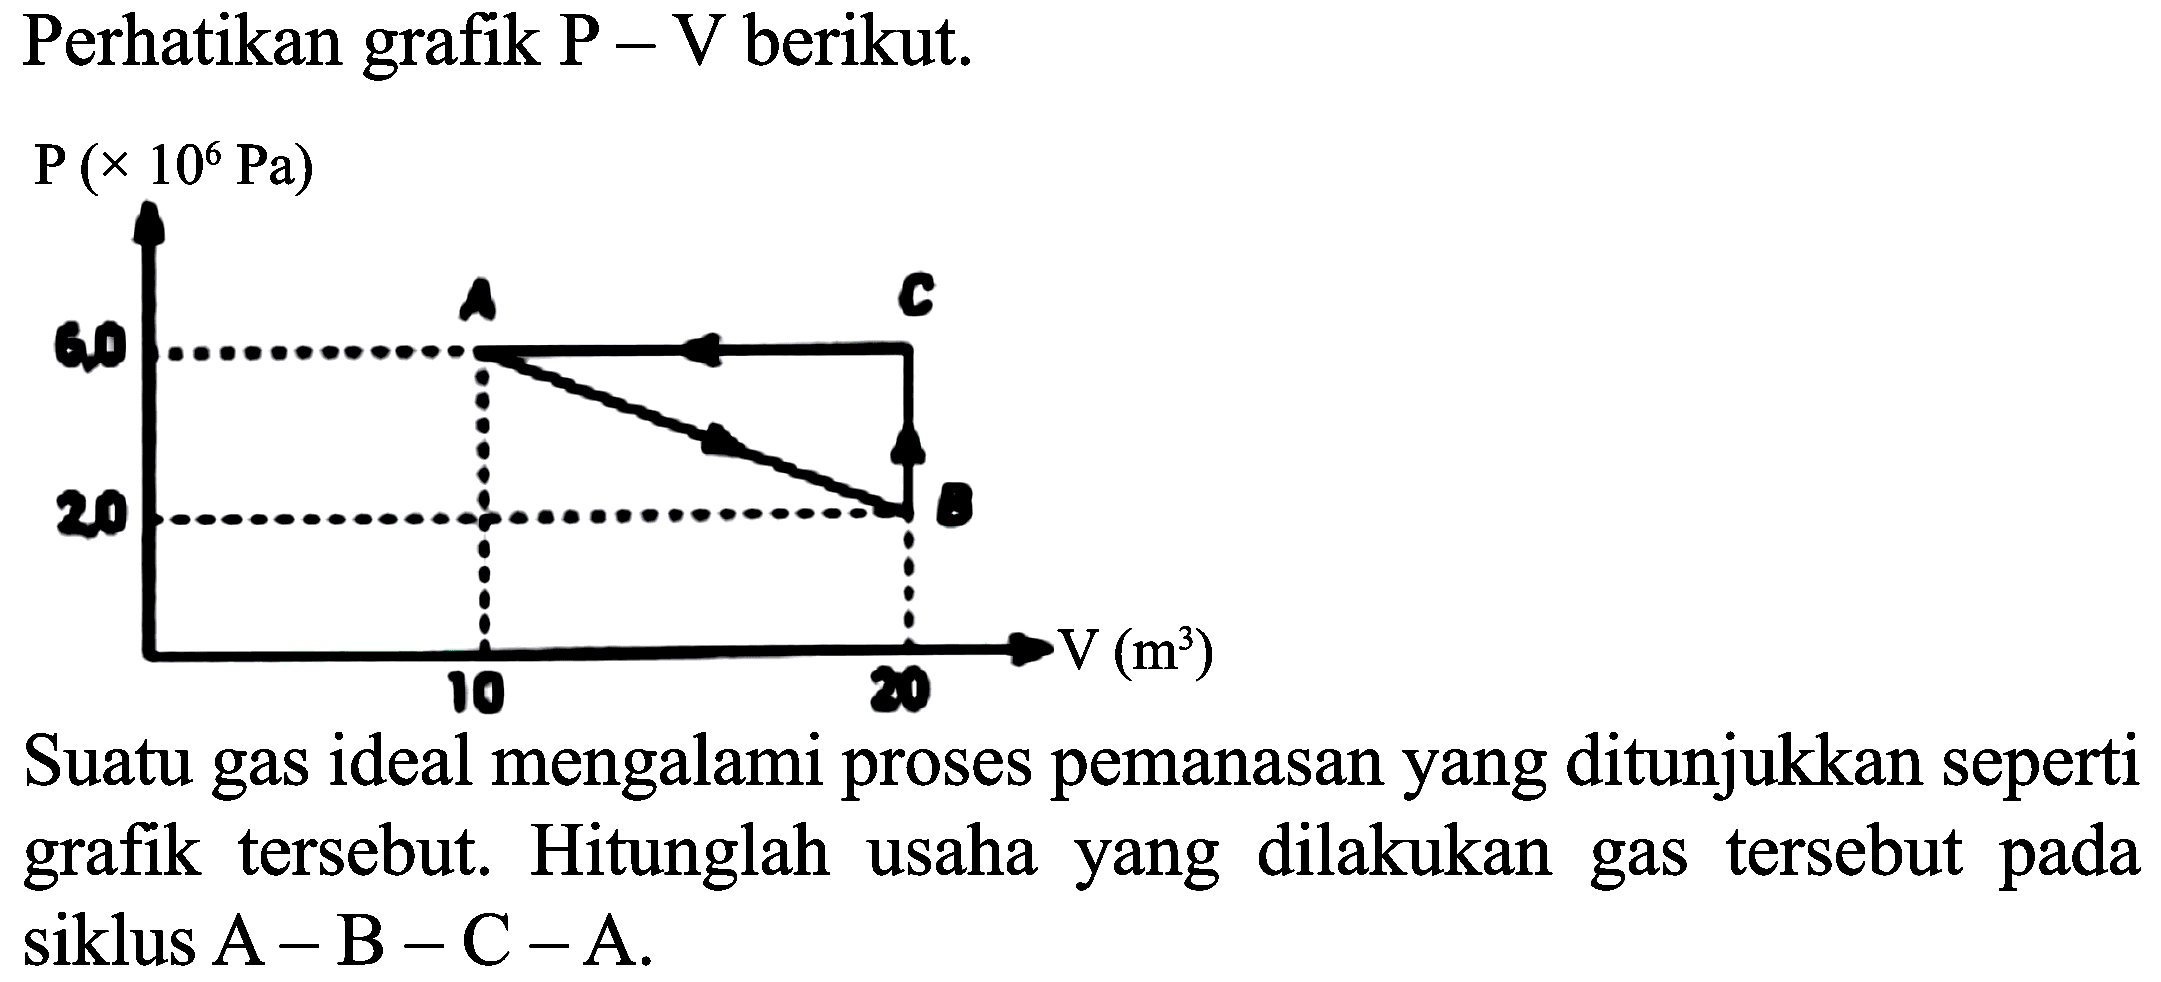 Perhatikan grafik  P-V  berikut.
Suatu gas ideal mengalami proses pemanasan yang ditunjukkan seperti grafik tersebut. Hitunglah usaha yang dilakukan gas tersebut pada siklus  A-\mathrm{B}-C-A .